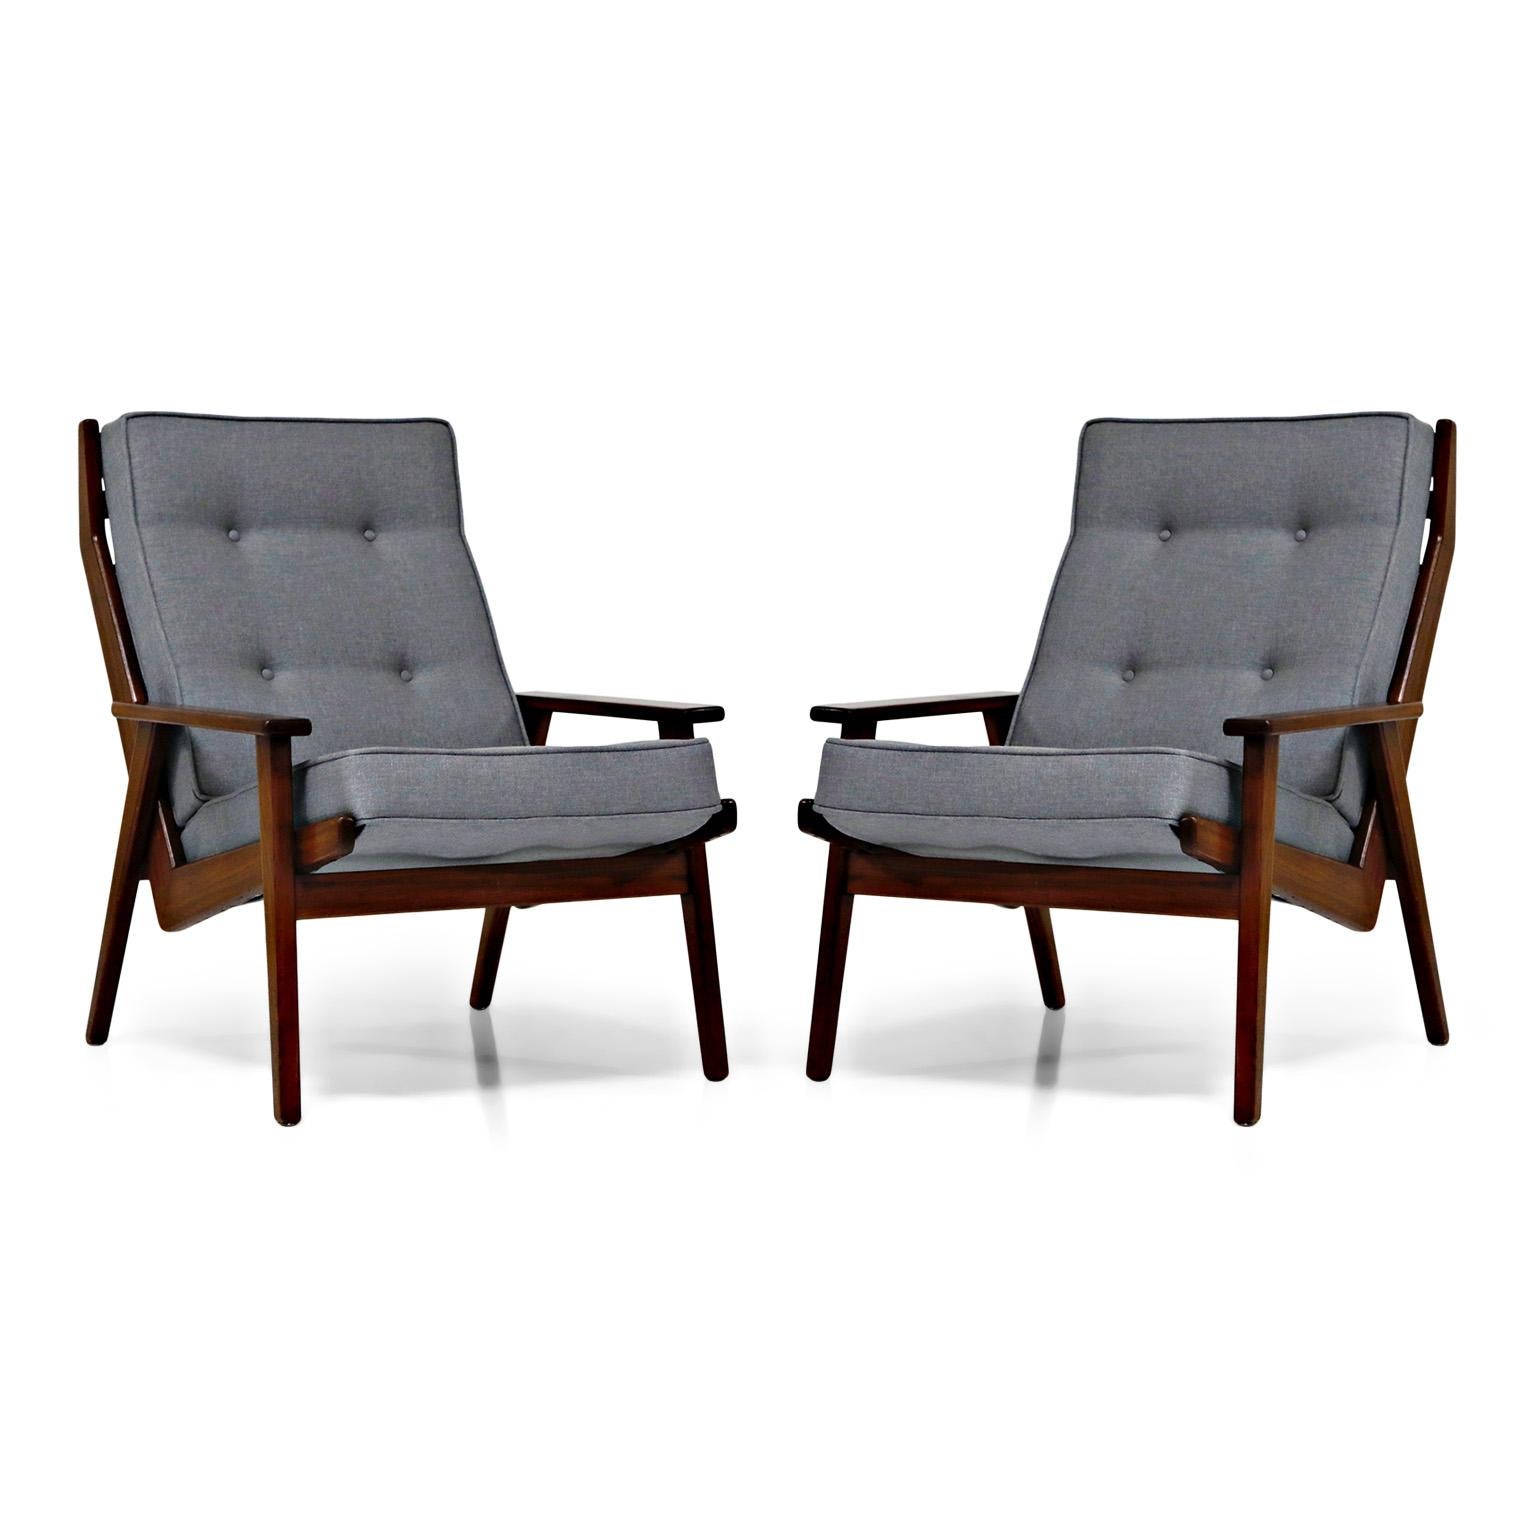 Danish Pair of Lotus Chairs by Robert Parry for Gelderland, Denmark 1950s, Restored